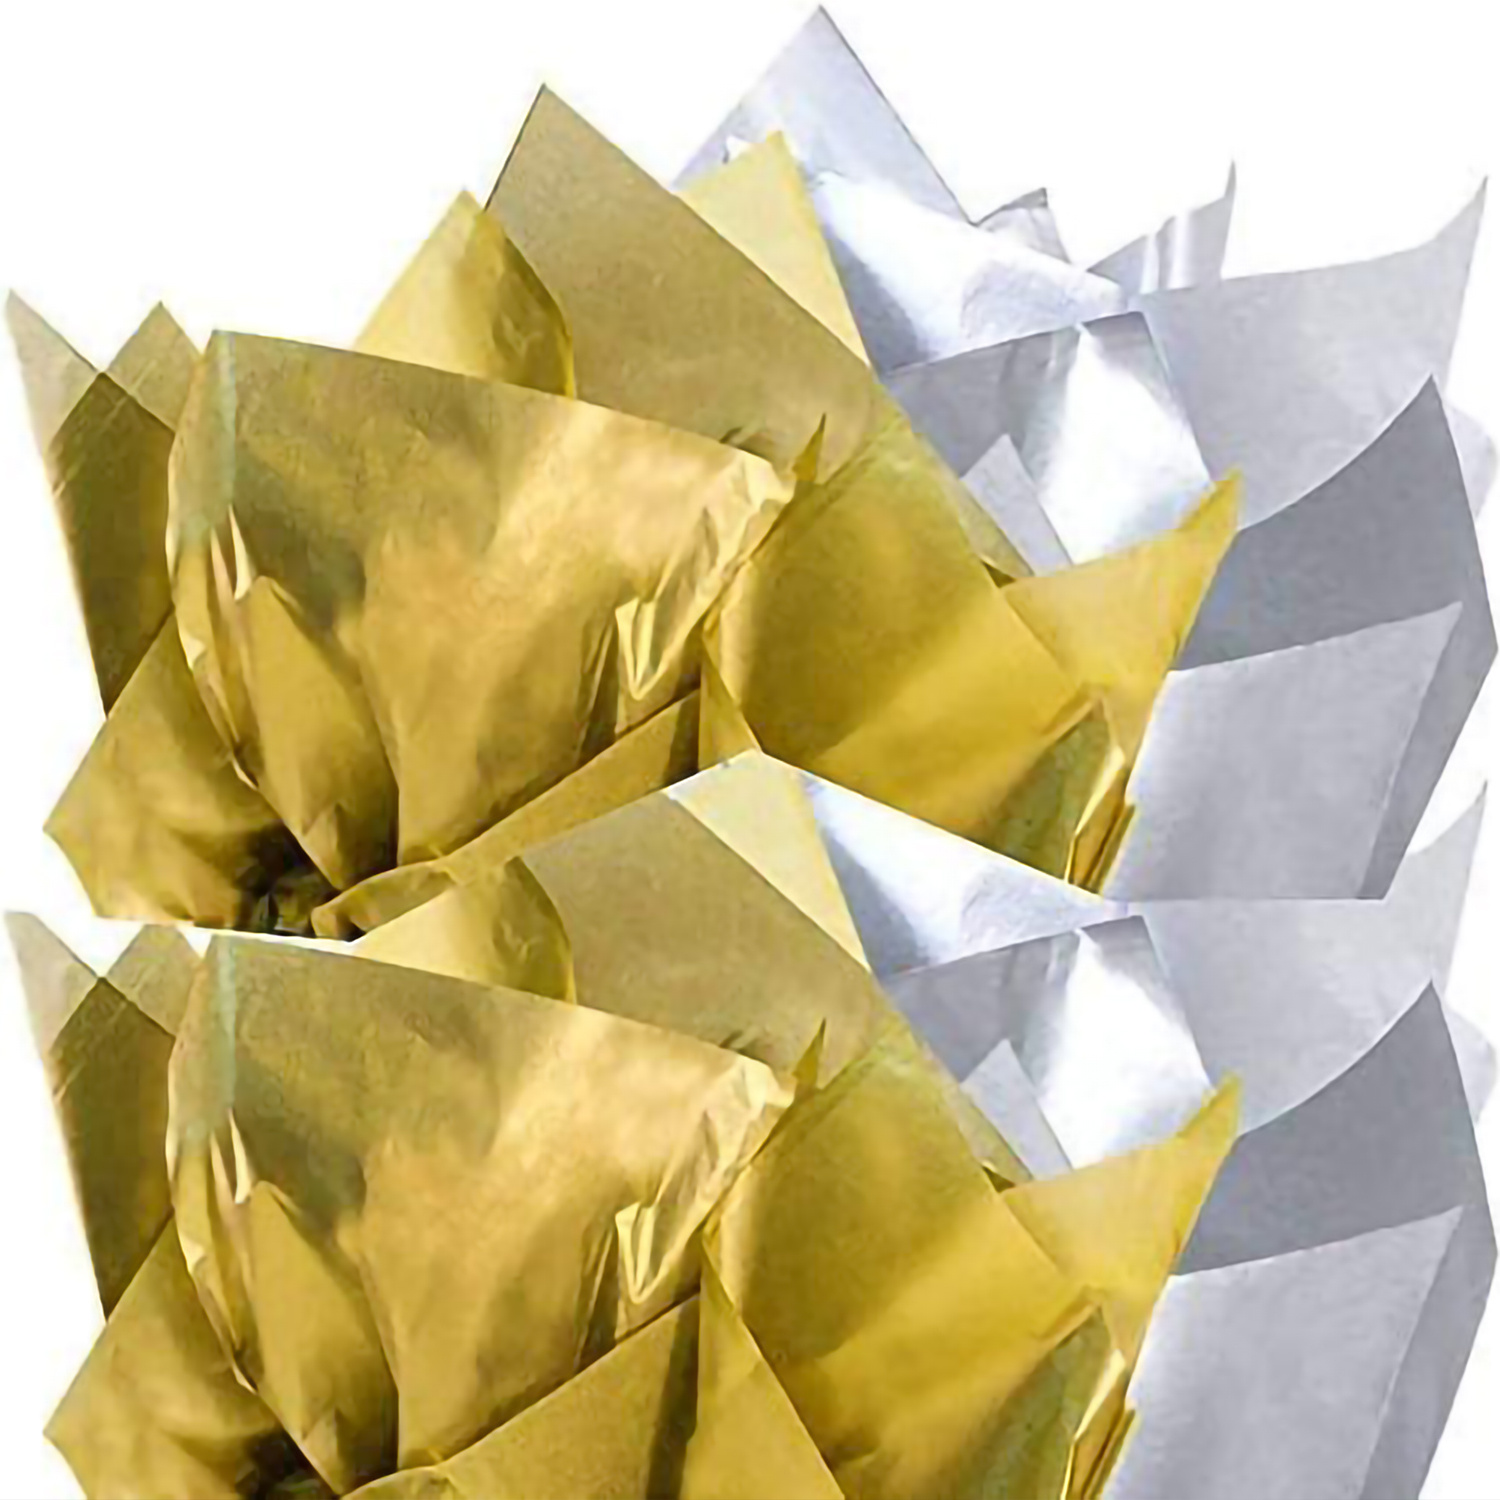 CZ Store - Gold Leaf | 5.5 x 5.5 | 100 Pcs | Copper Foil Sheets with Metallic Texture - Golden Gilding Material for Arts & Crafts, Decorations, SLI